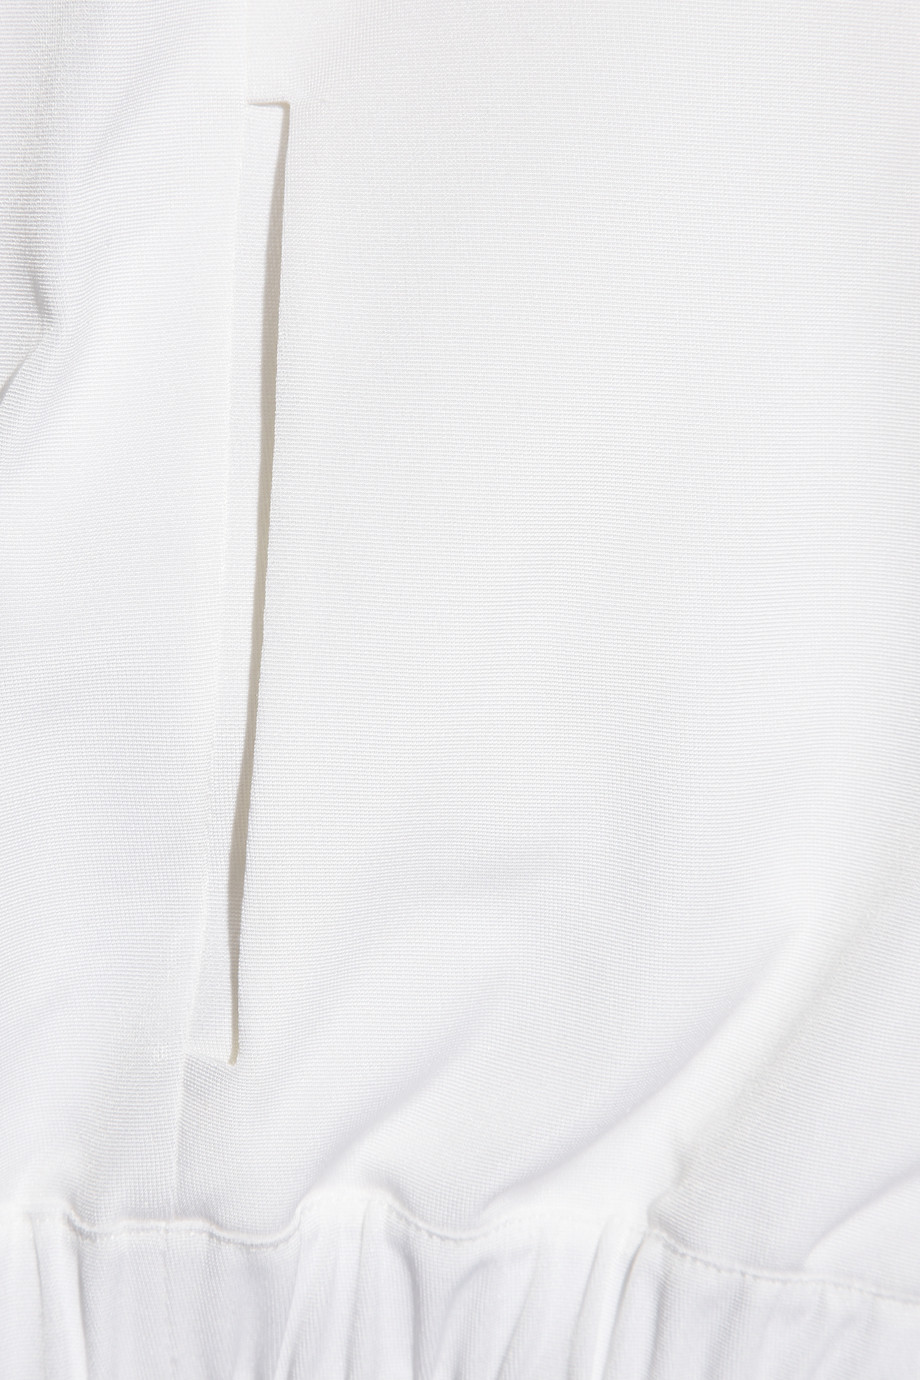 Lyst - Hakaan Tema Satin-Crepe Jacket in White